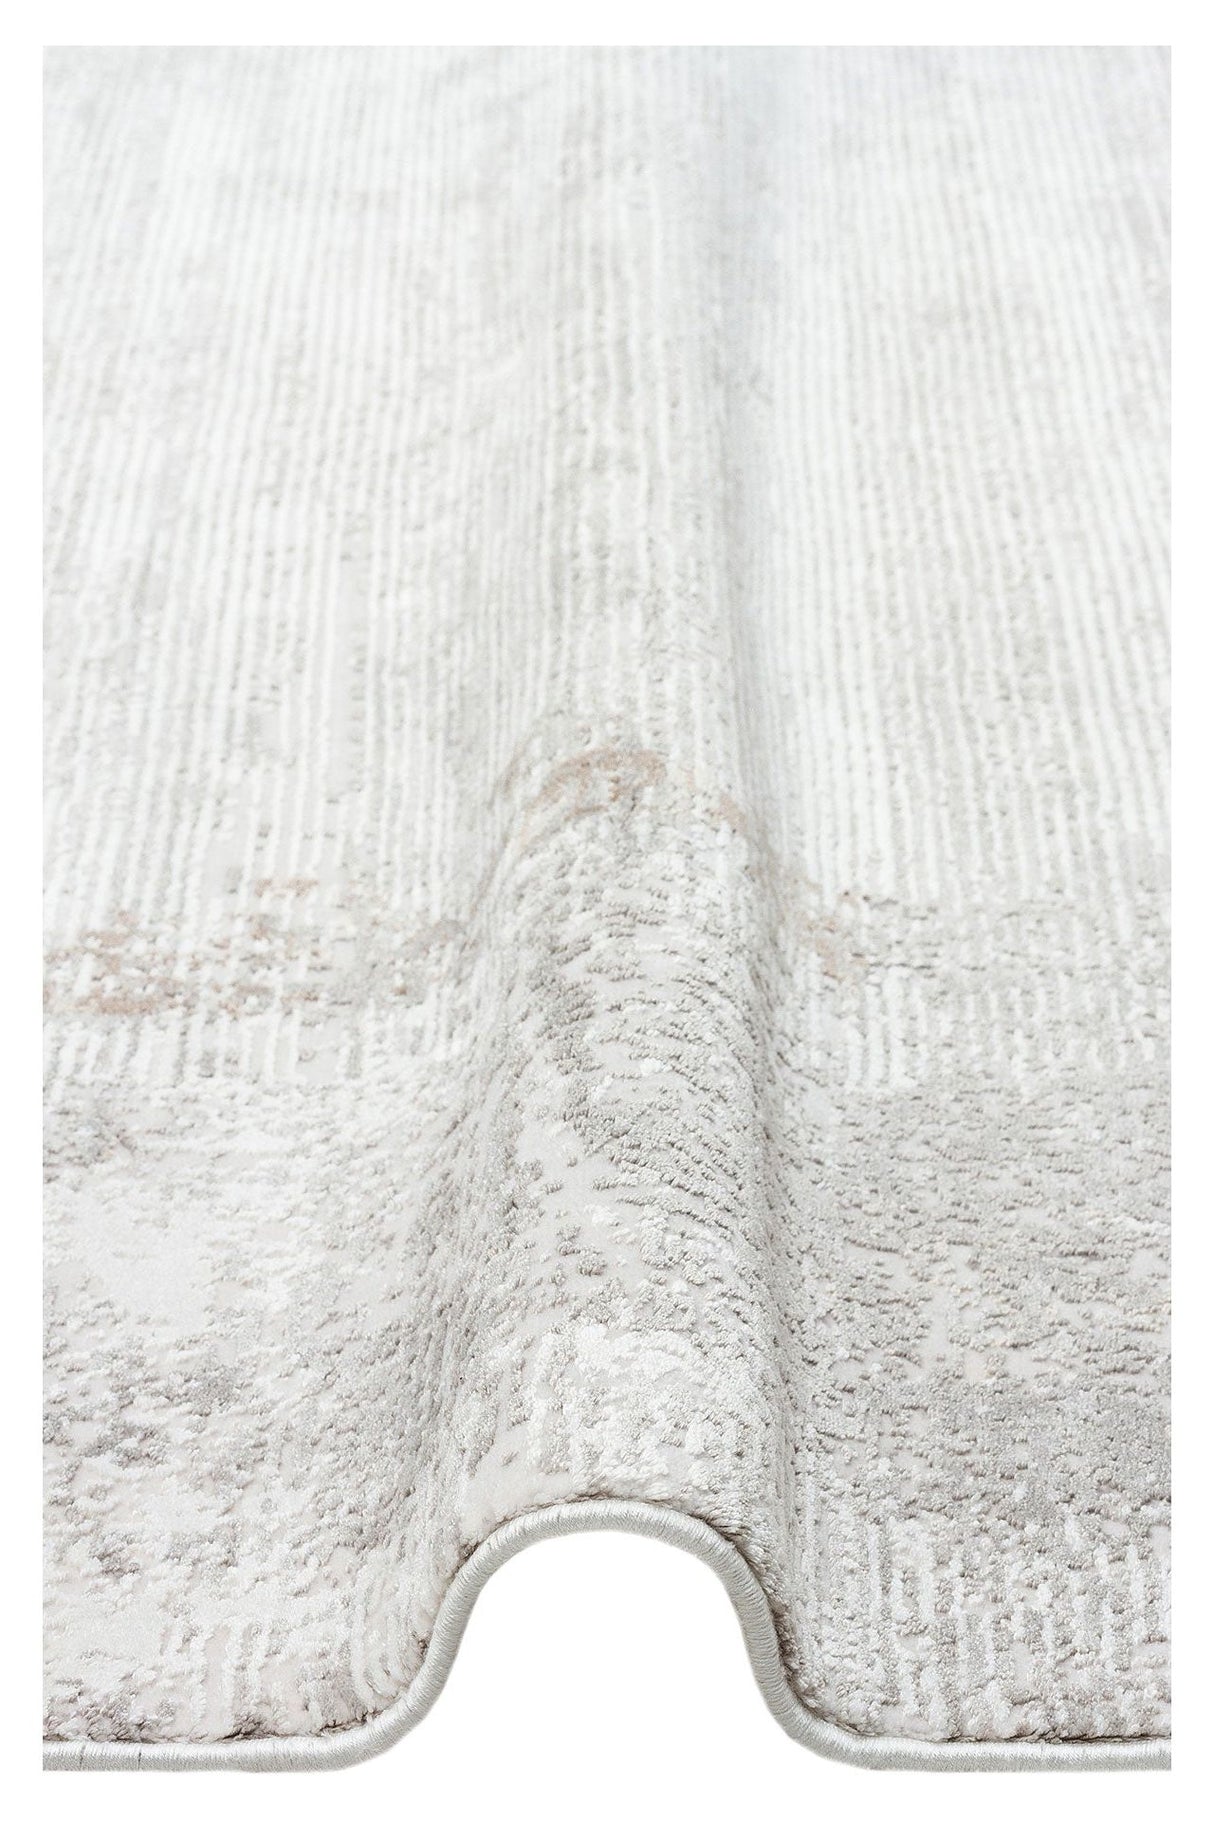 #Turkish_Carpets_Rugs# #Modern_Carpets# #Abrash_Carpets#Mnt 01 Cream Beige